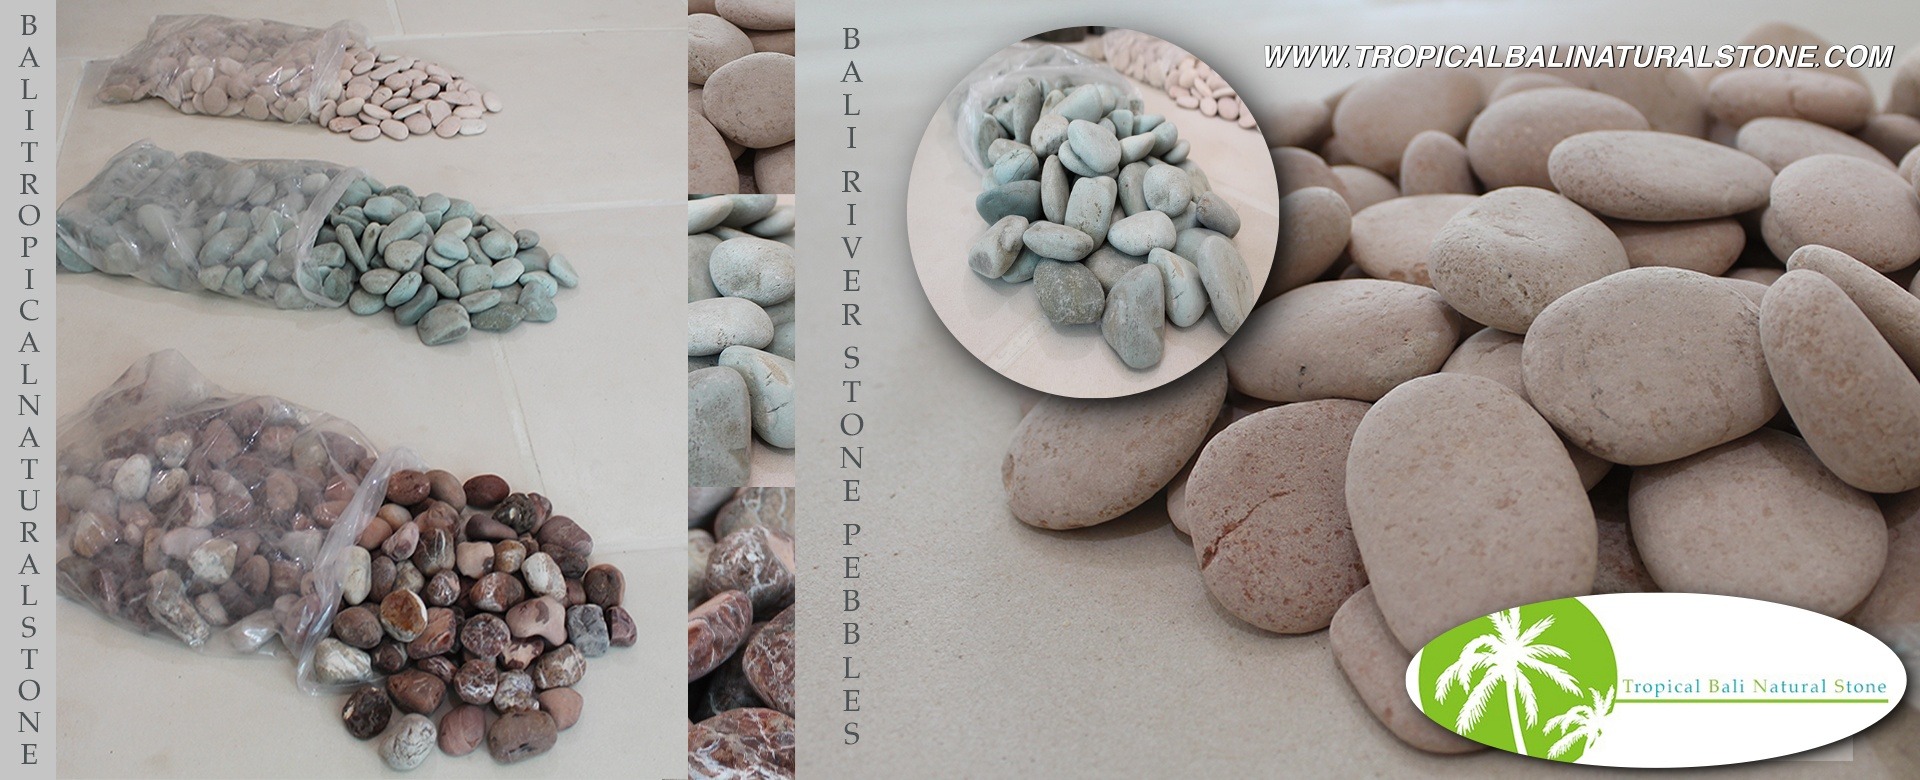 image for Bali Pebble Stones,Bali Garden Stone Pebbles